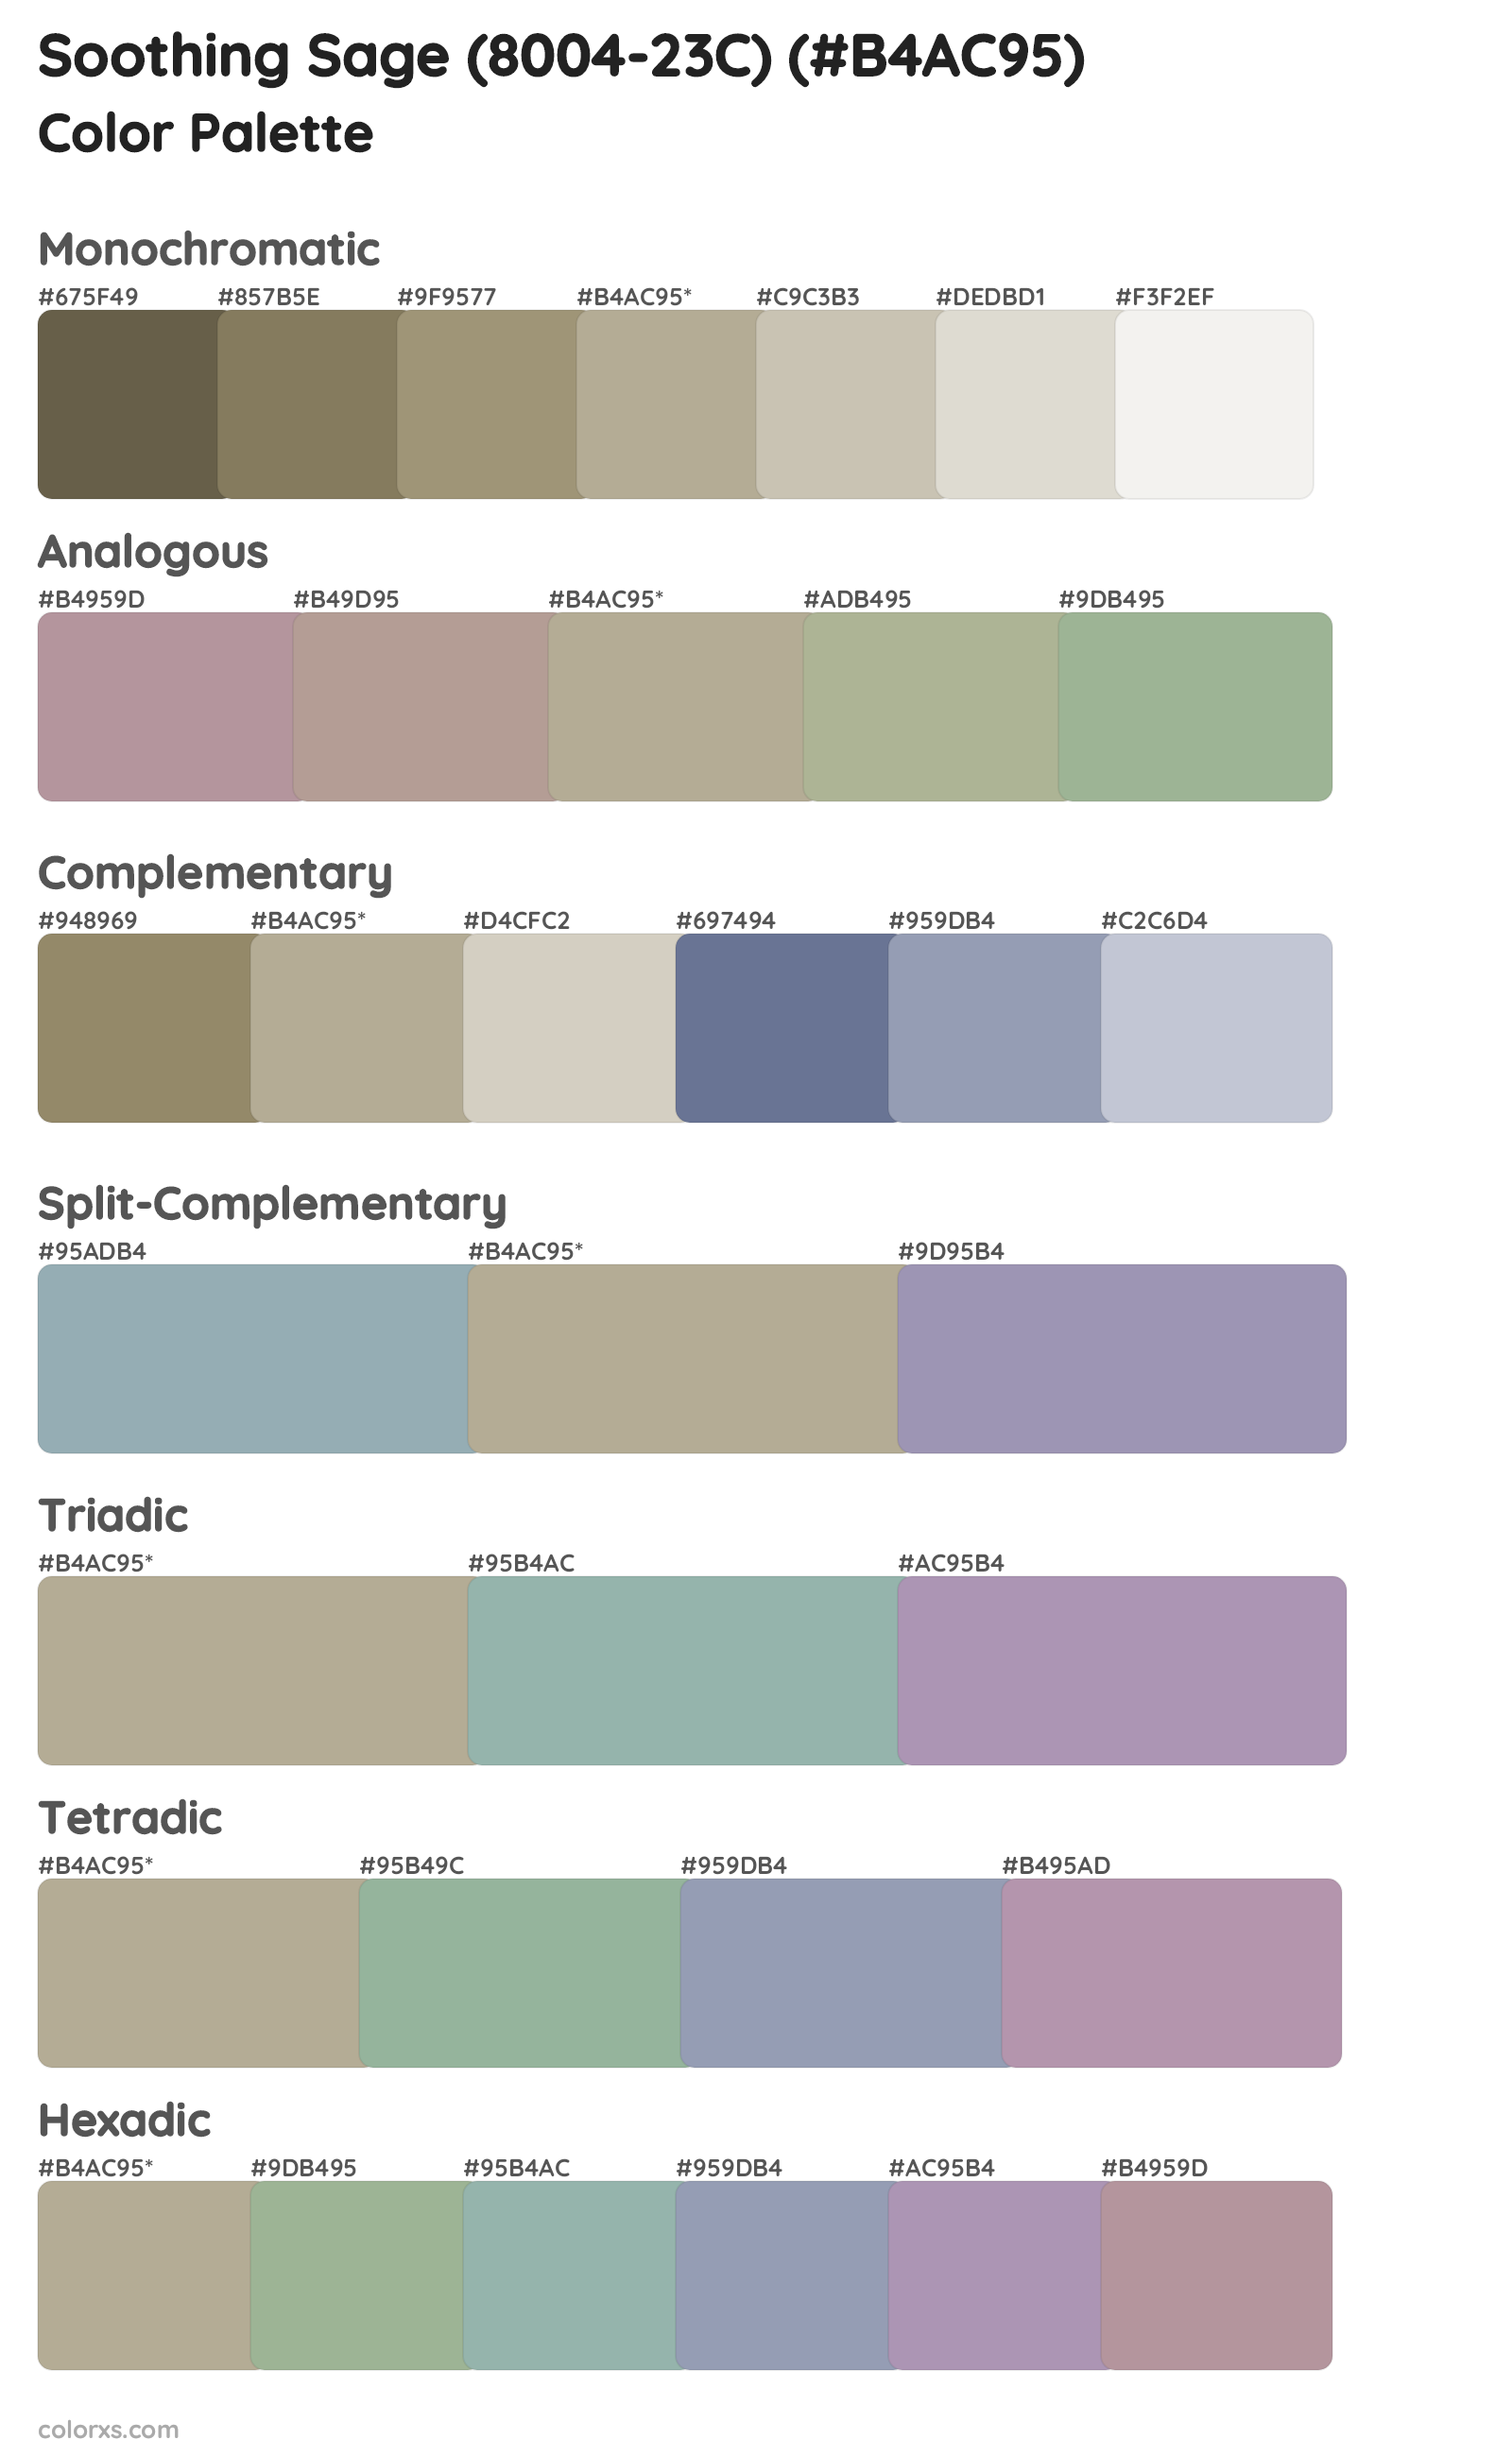 Soothing Sage (8004-23C) Color Scheme Palettes